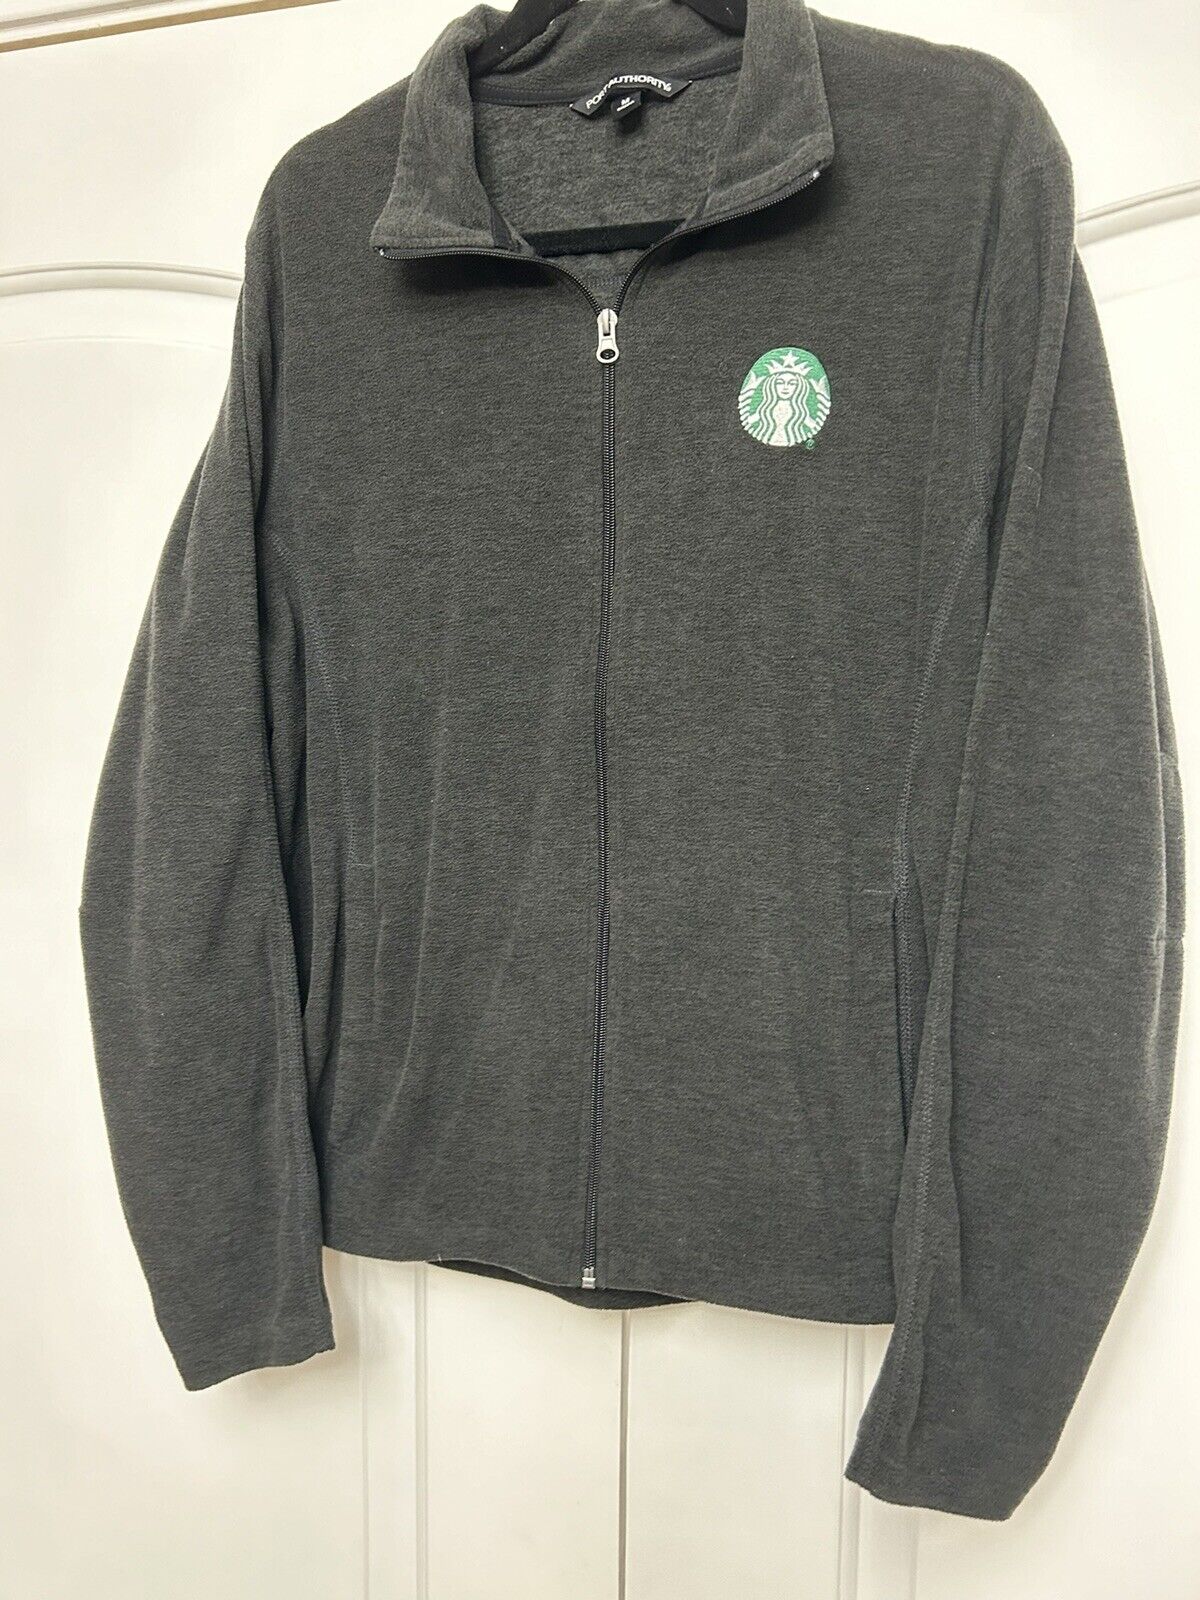 Starbucks embroidered fleece Jacket Medium